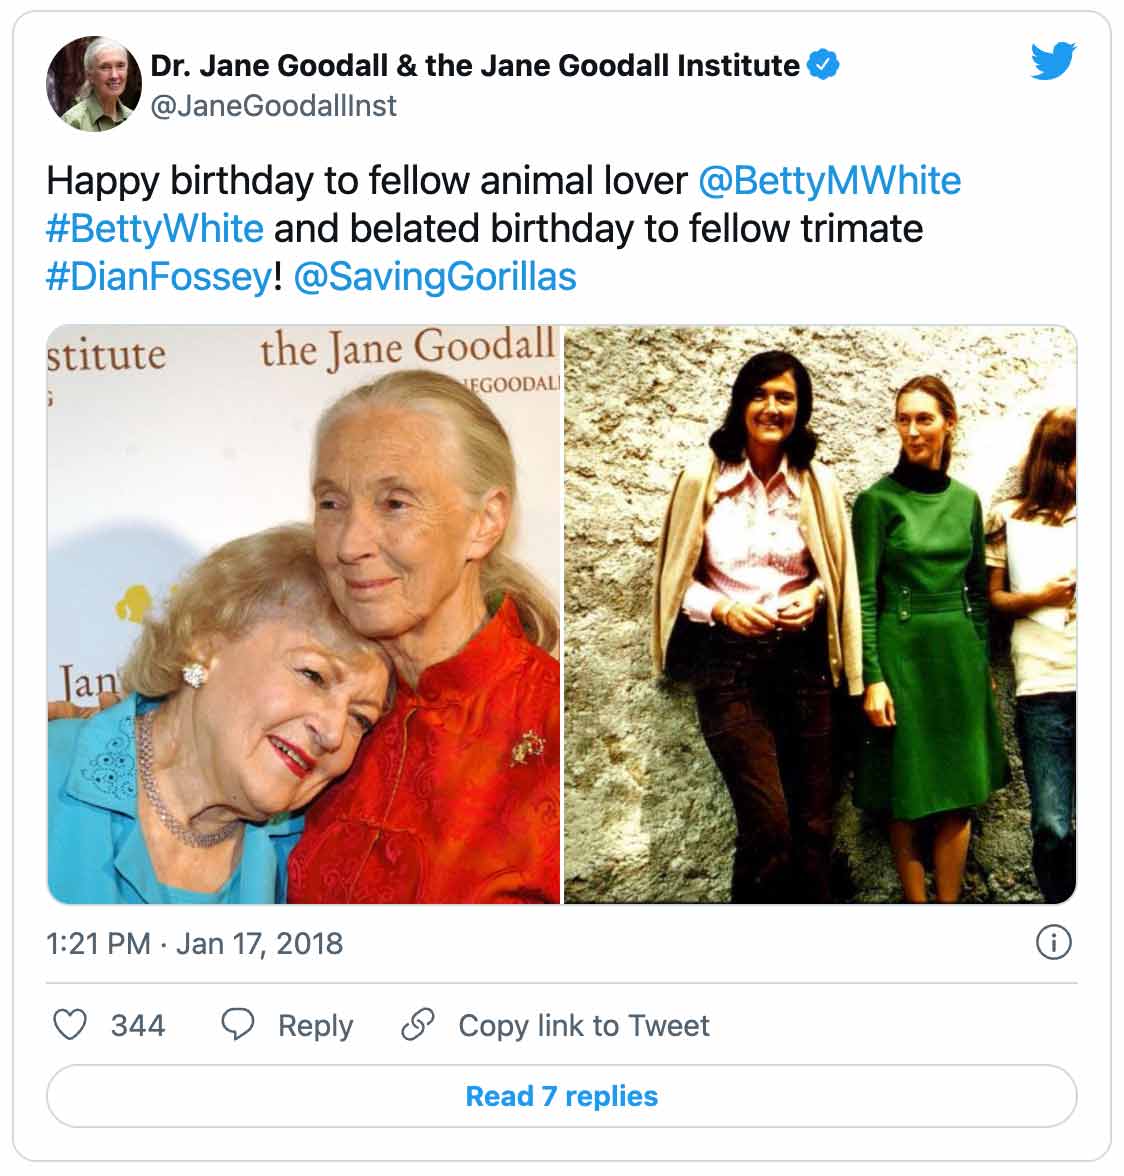 Tweet met afbeeldingen: Dr. Jane Goodall &the Jane Goodall Institute @JaneGoodallInst Happy birthday to fellow animal lover @BettyMWhite #BettyWhite and late birthday to fellow trimate #DianFossey!  @SavingGorillas